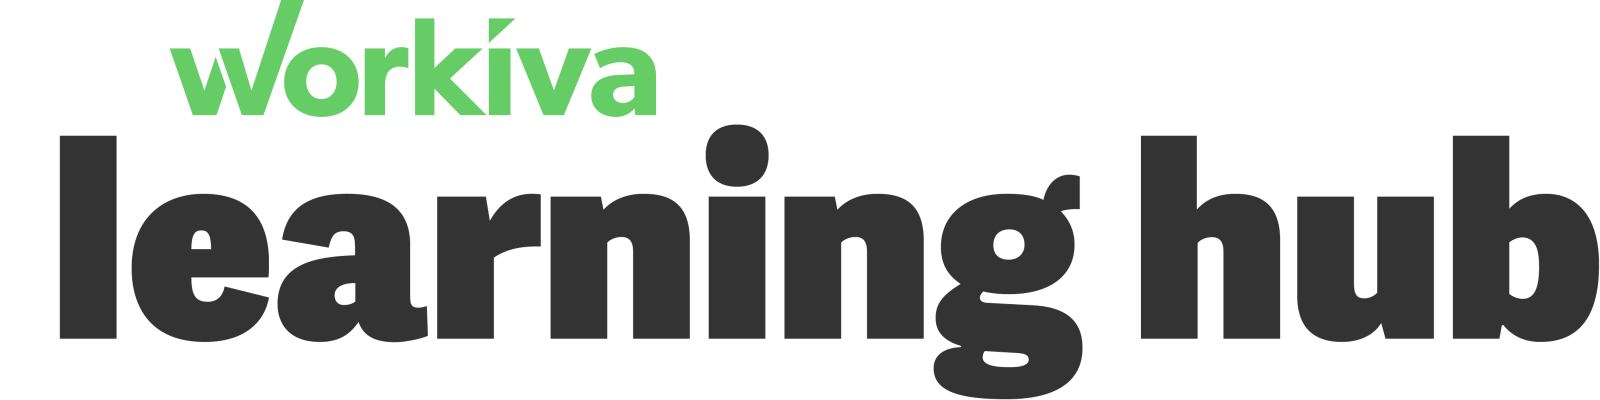 Workiva Learning Hub